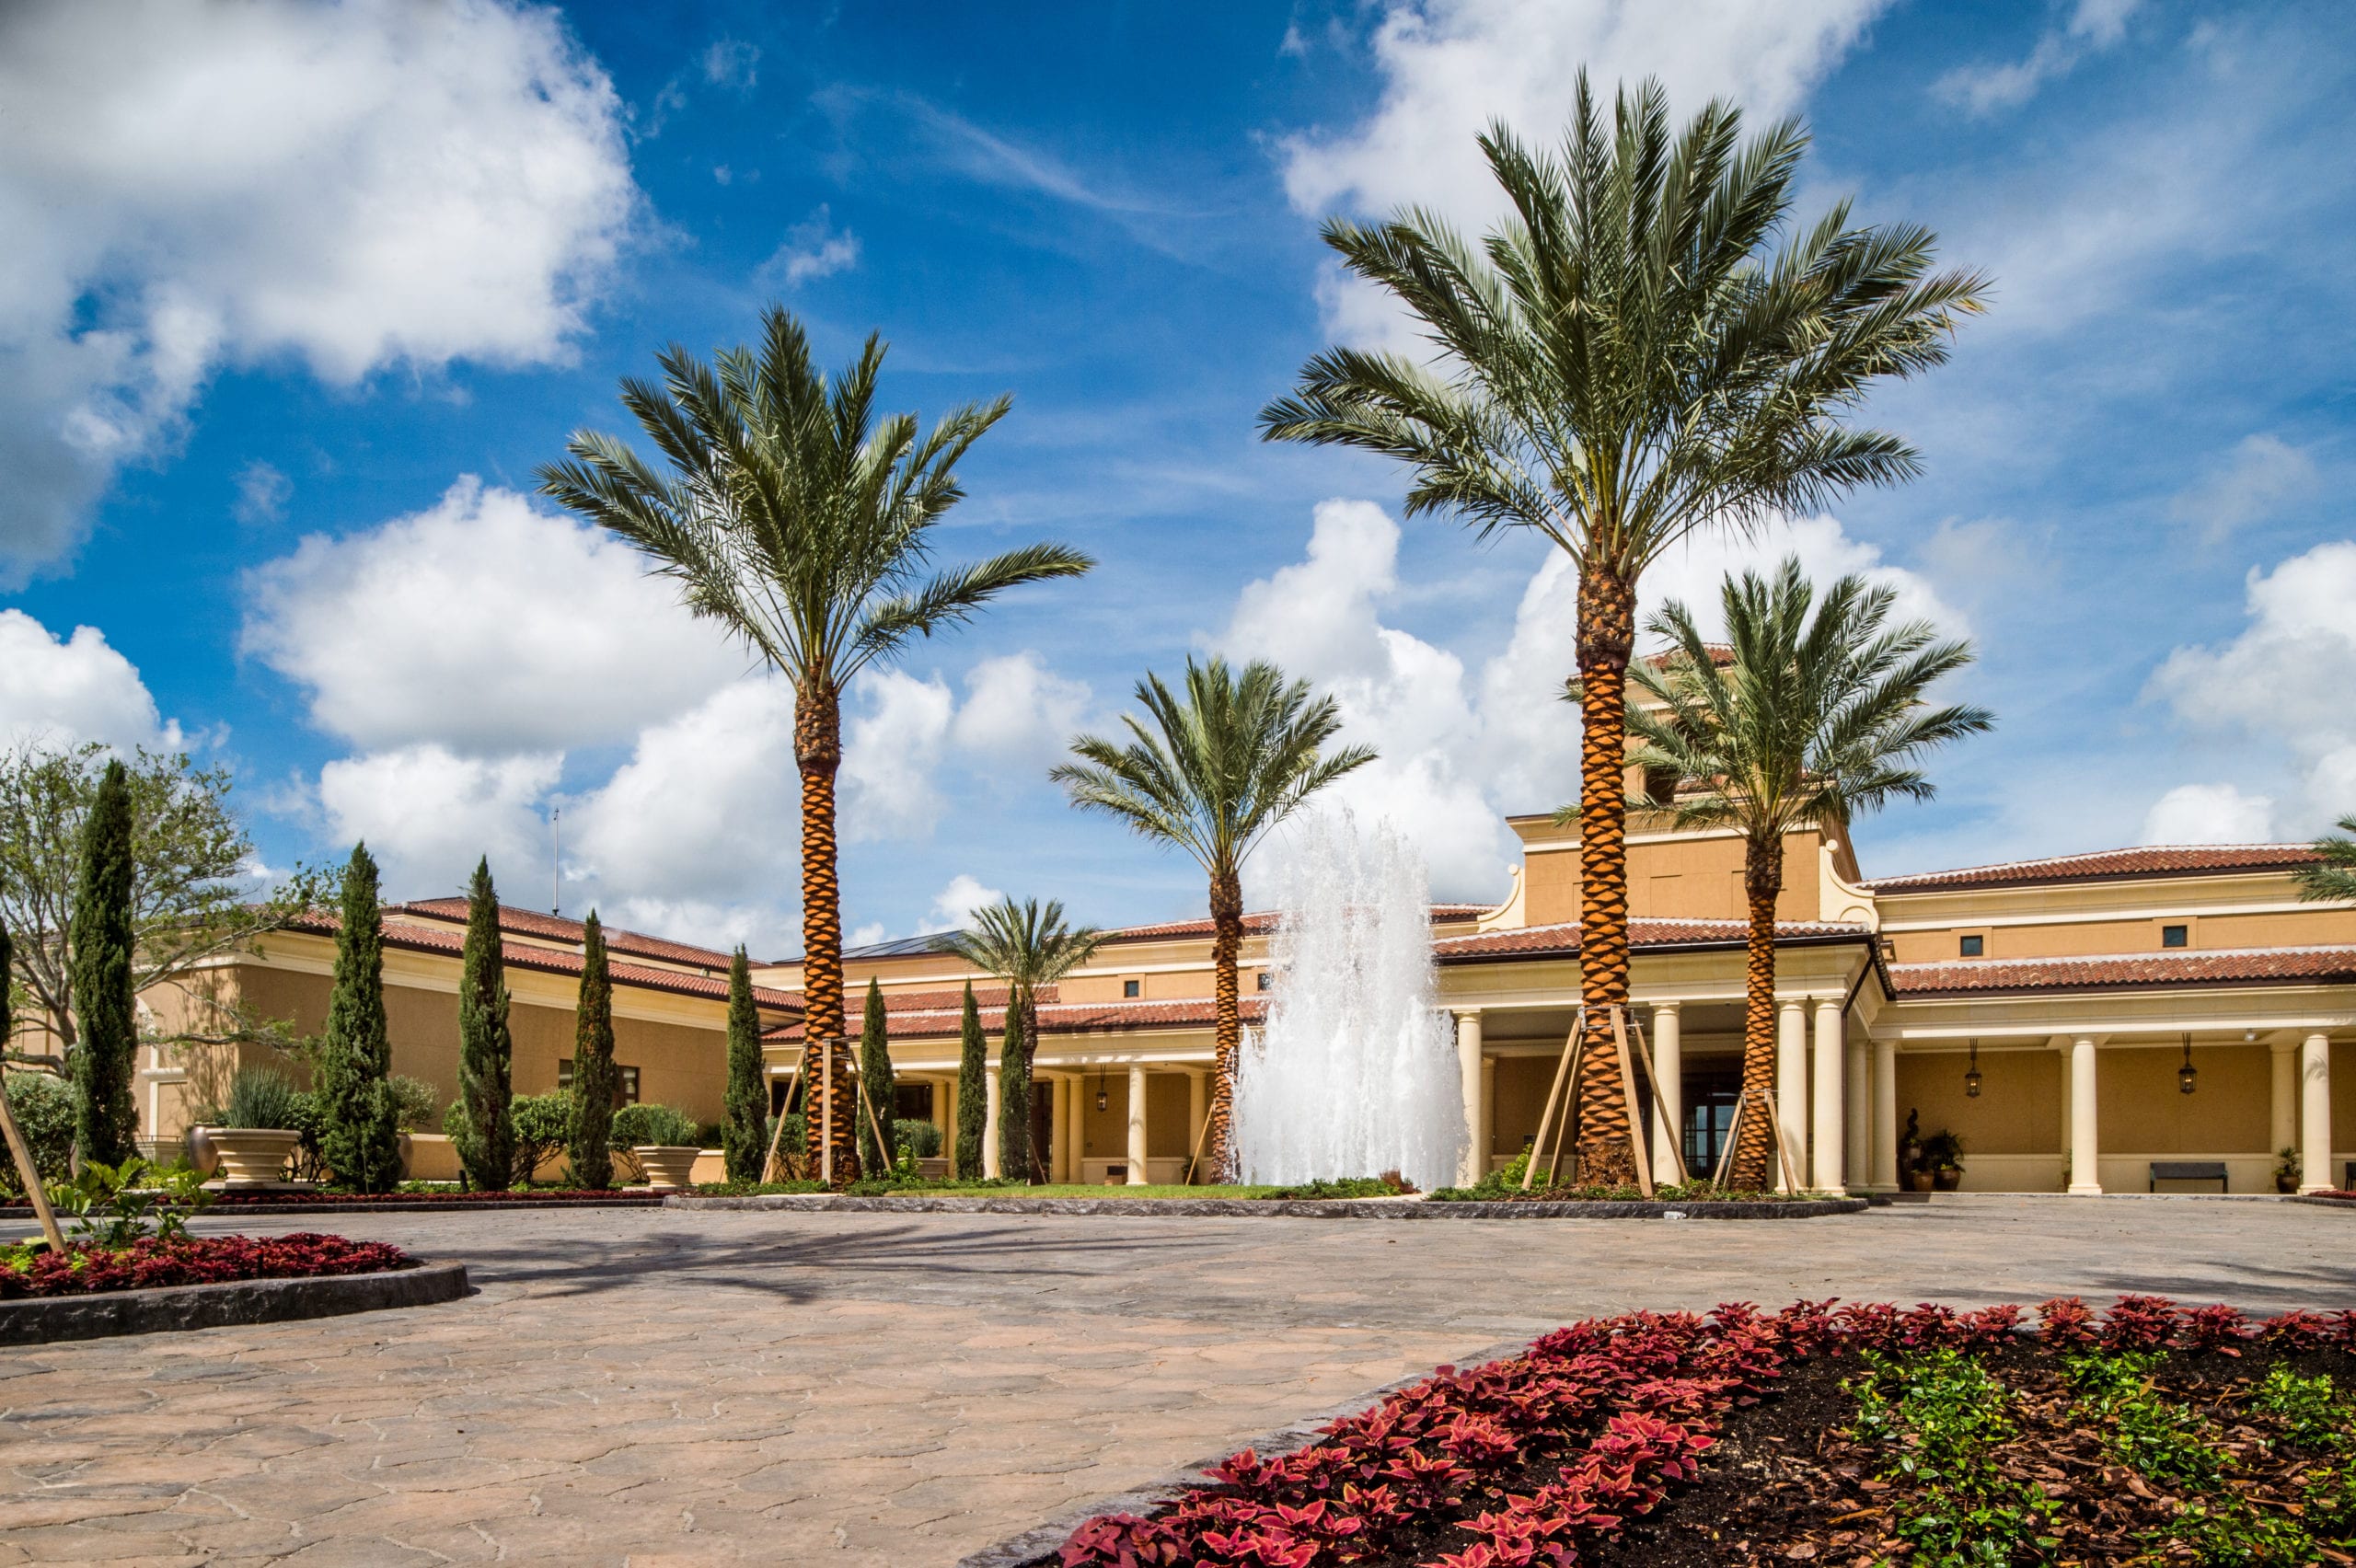 IU C&I Studios Portfolio Four Seasons Building with walkway, trees and palm trees with fountain